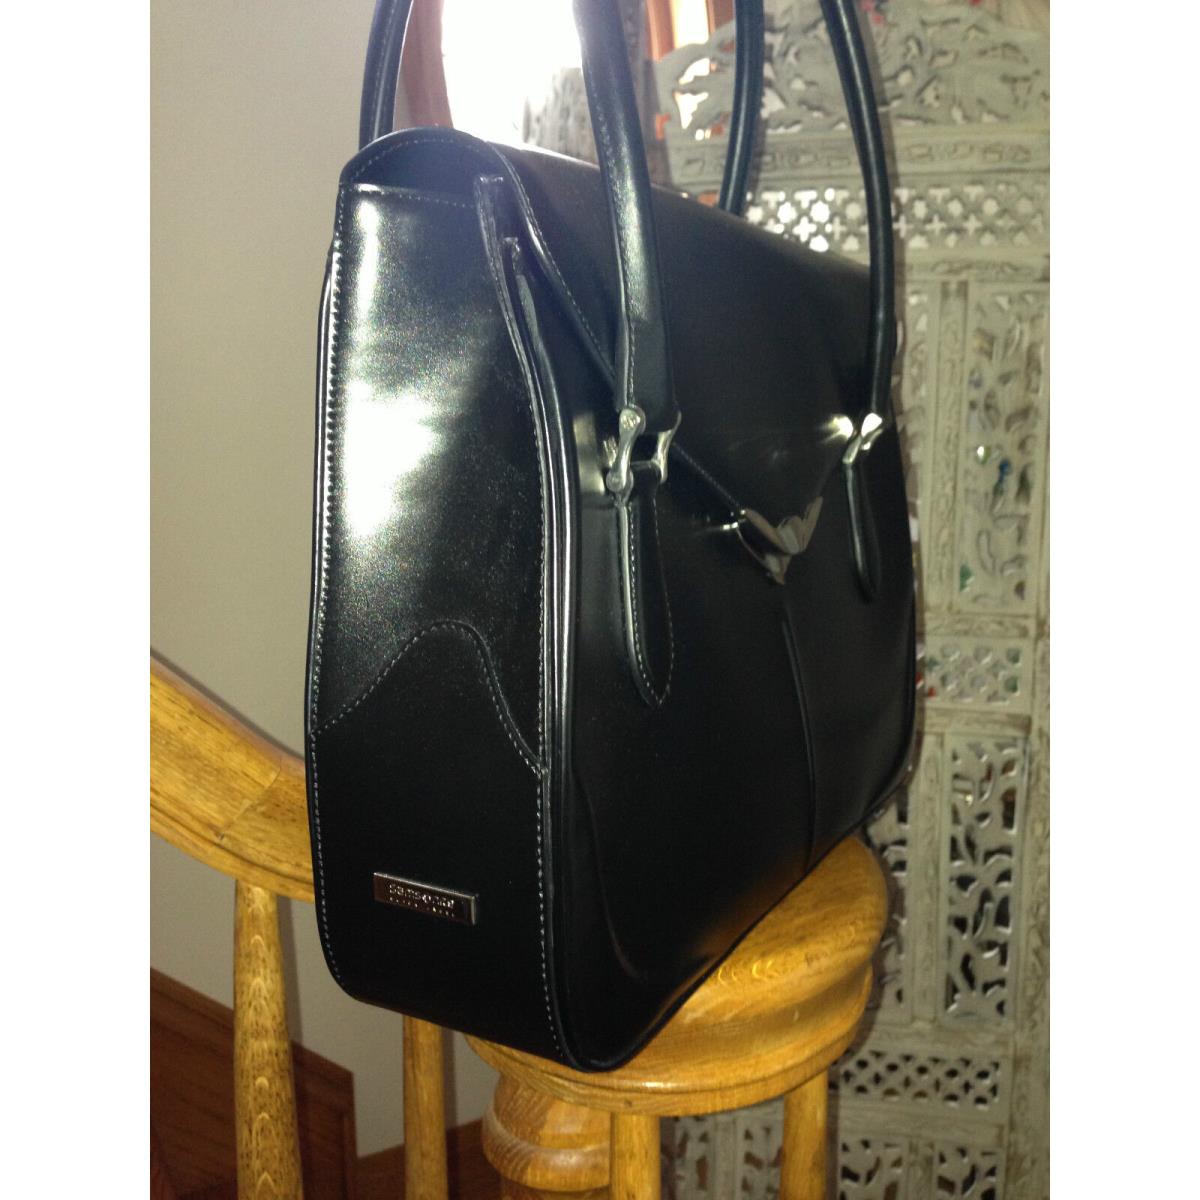 Samsonite Black Label Bayamo Leather Purse Bag Retail Price